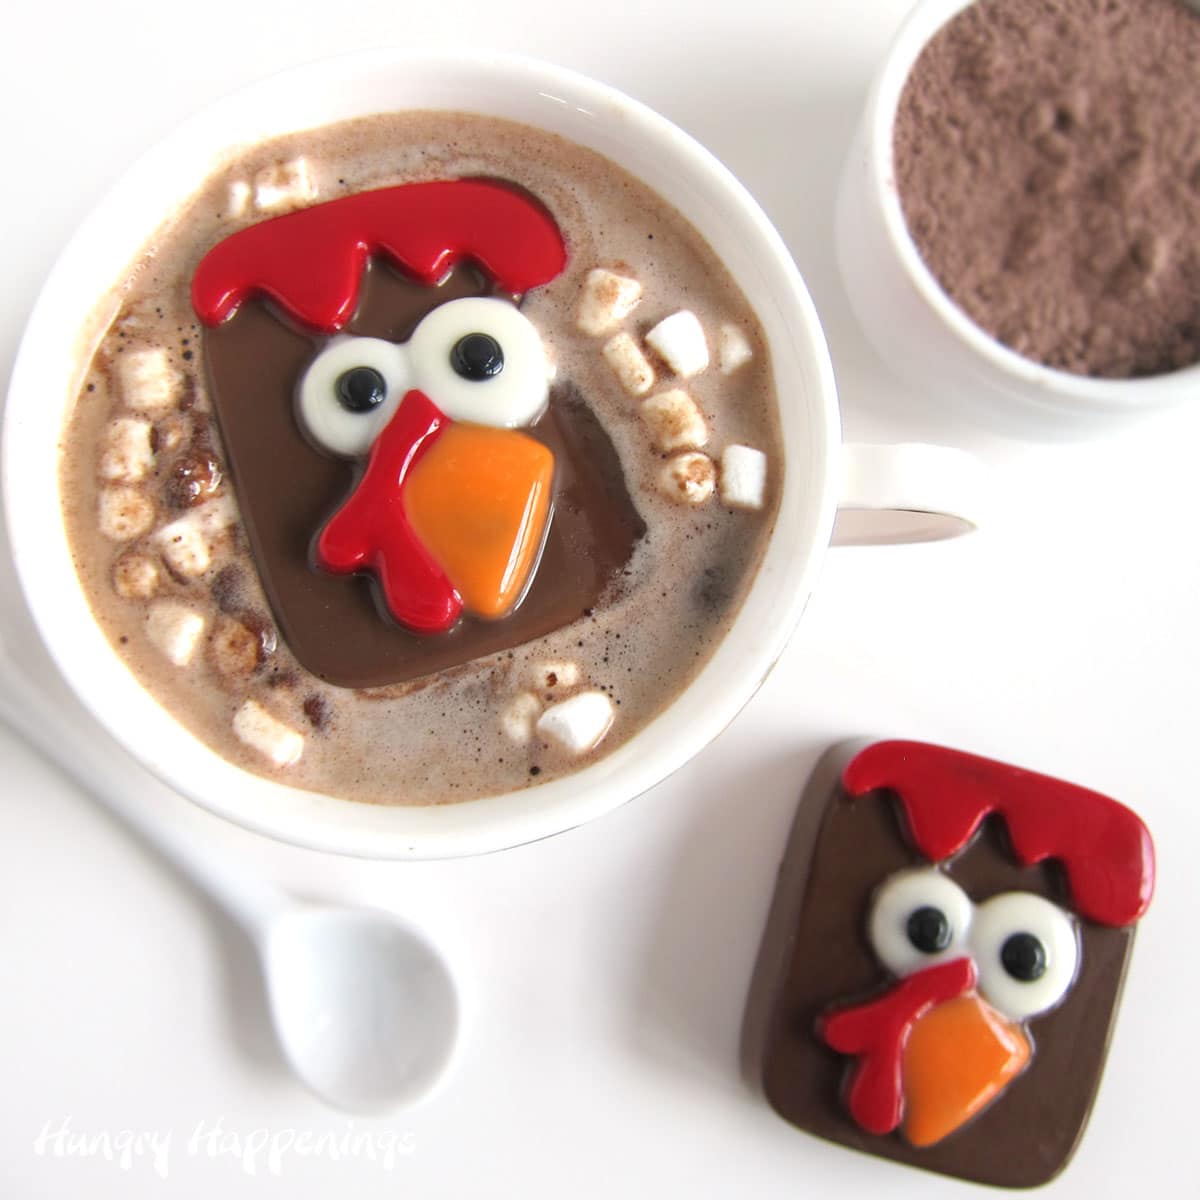 Turkey hot chocolate bombs melting in a coffee mug.